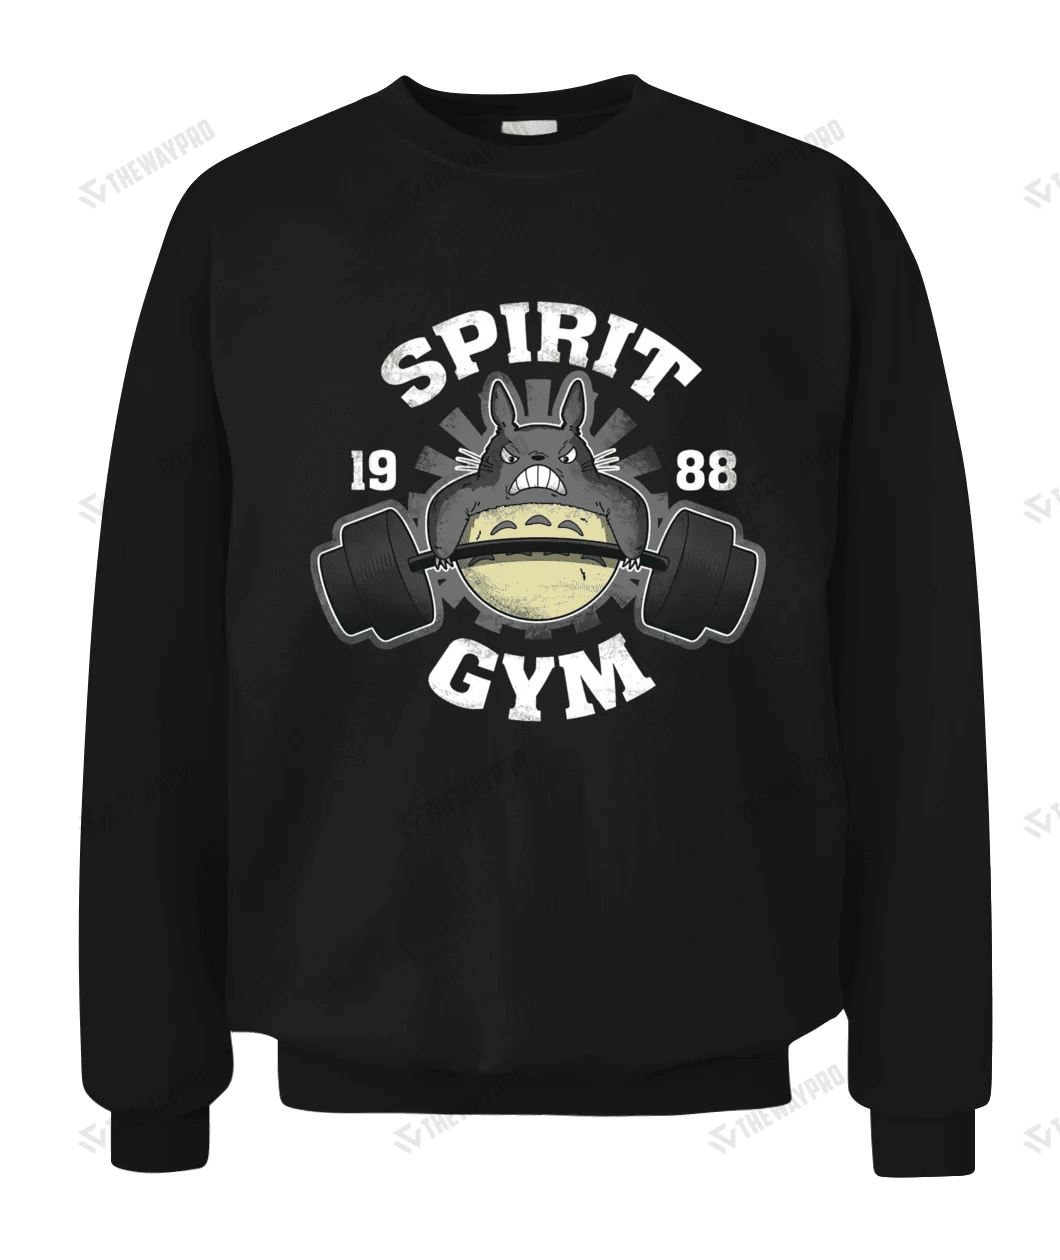 Spirit Gym Custom Graphic Apparel